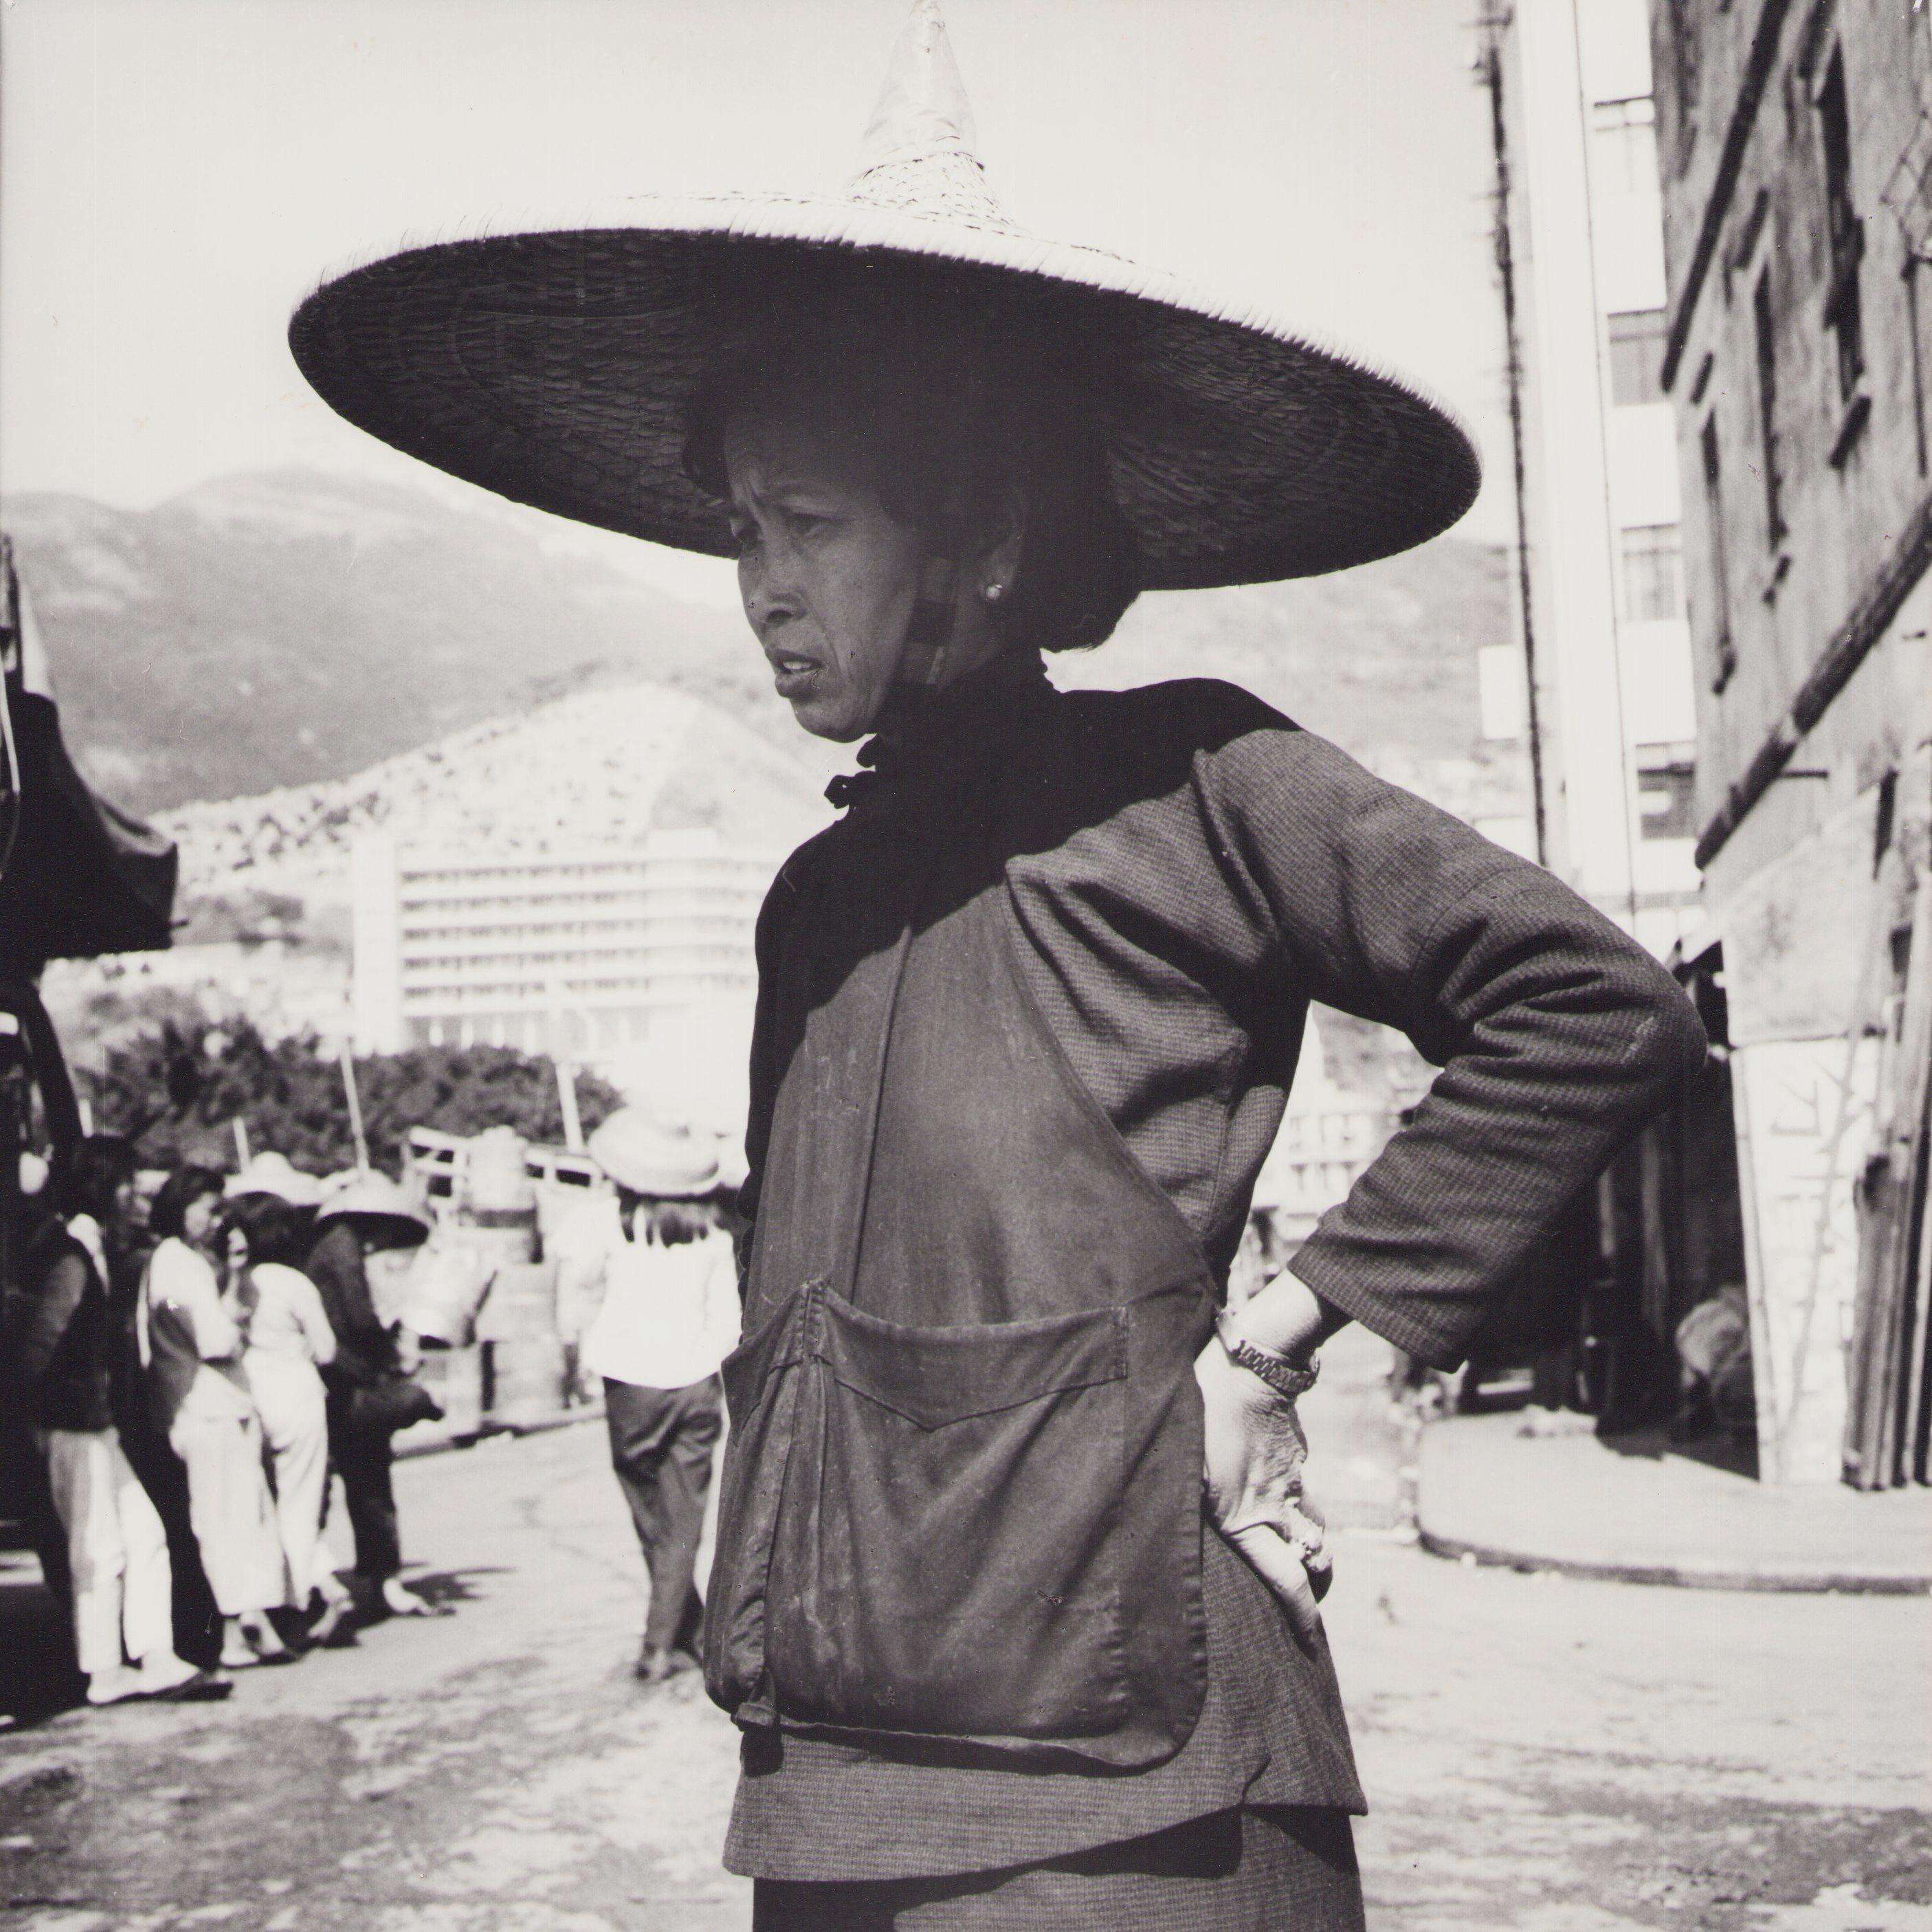 Hanna Seidel Portrait Photograph - Hong Kong, Woman, Street, Black and White Photography, 1960s, 24 x 24 cm